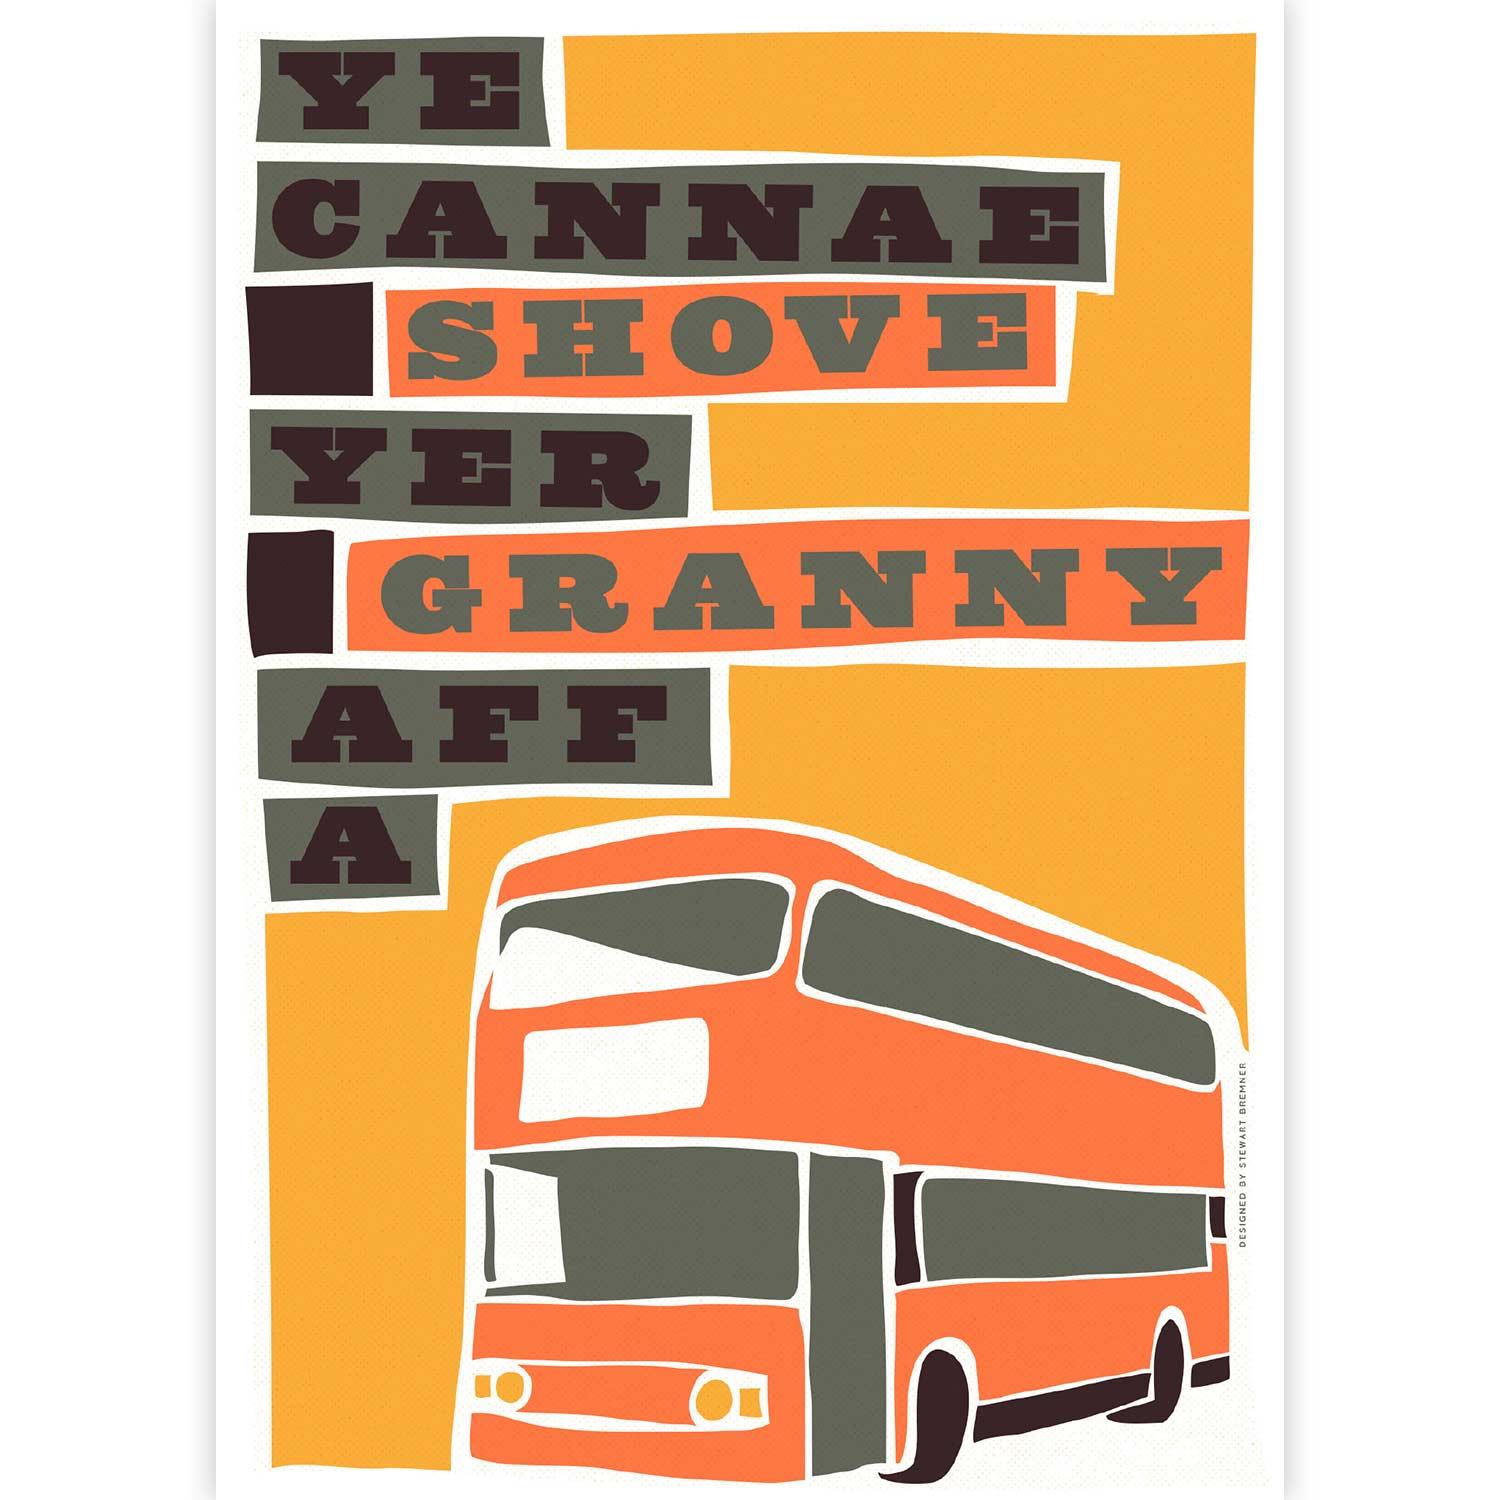 Ye Cannae Shove Yer Granny aff a Bus by Stewart Bremner